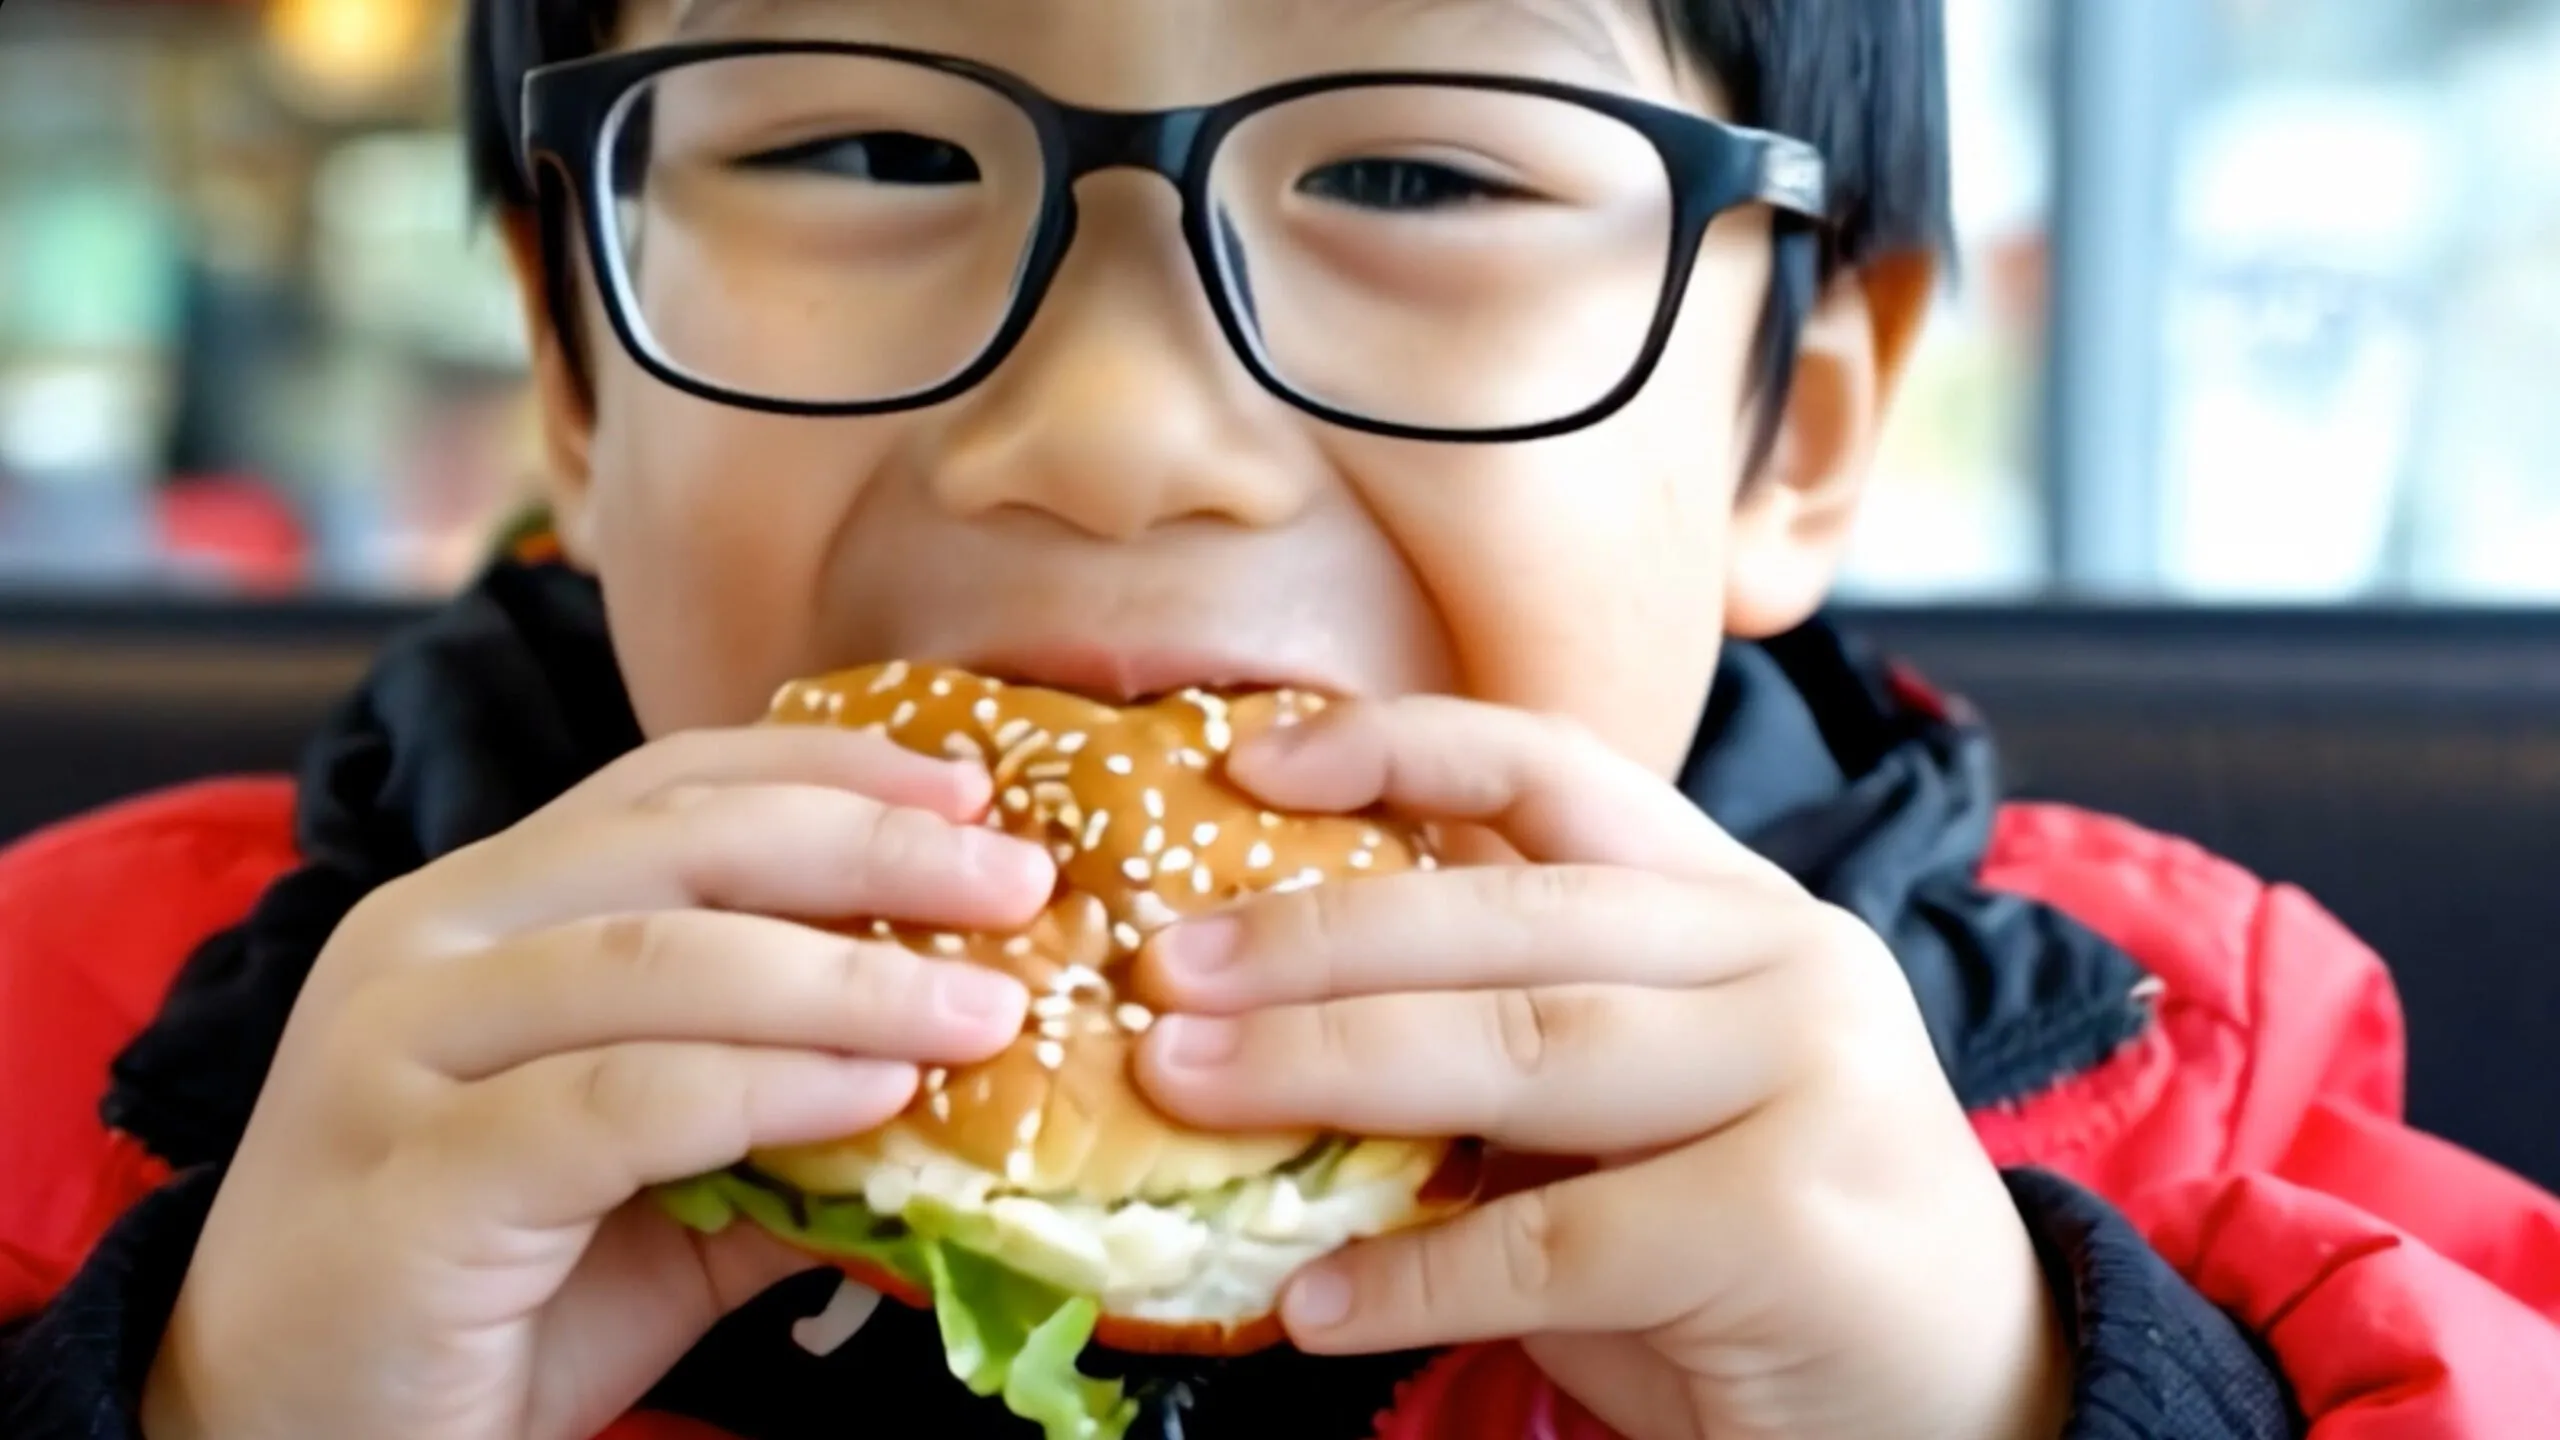 Kling Child Eating a Burger AI Video